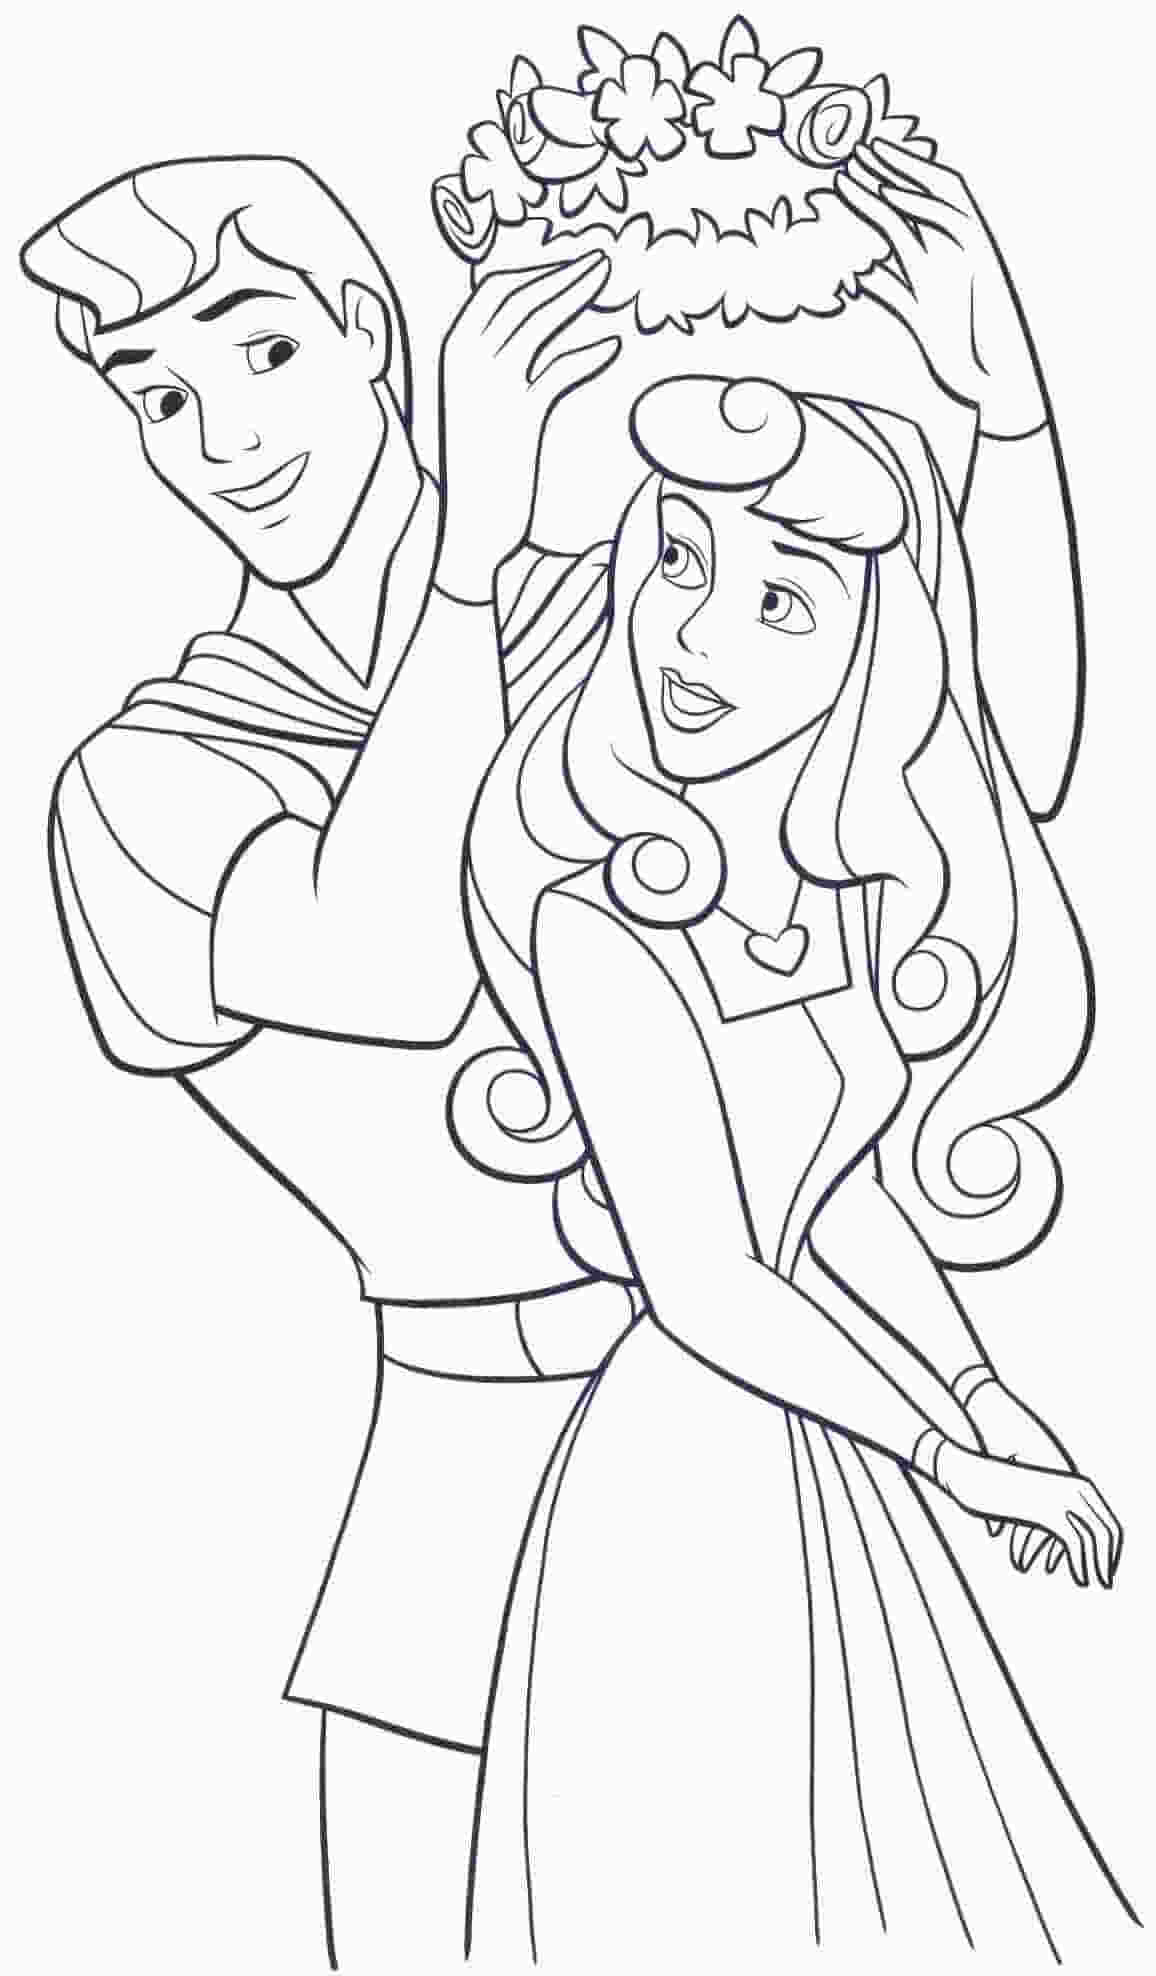 Princesa Aurora e o Príncipe para colorir